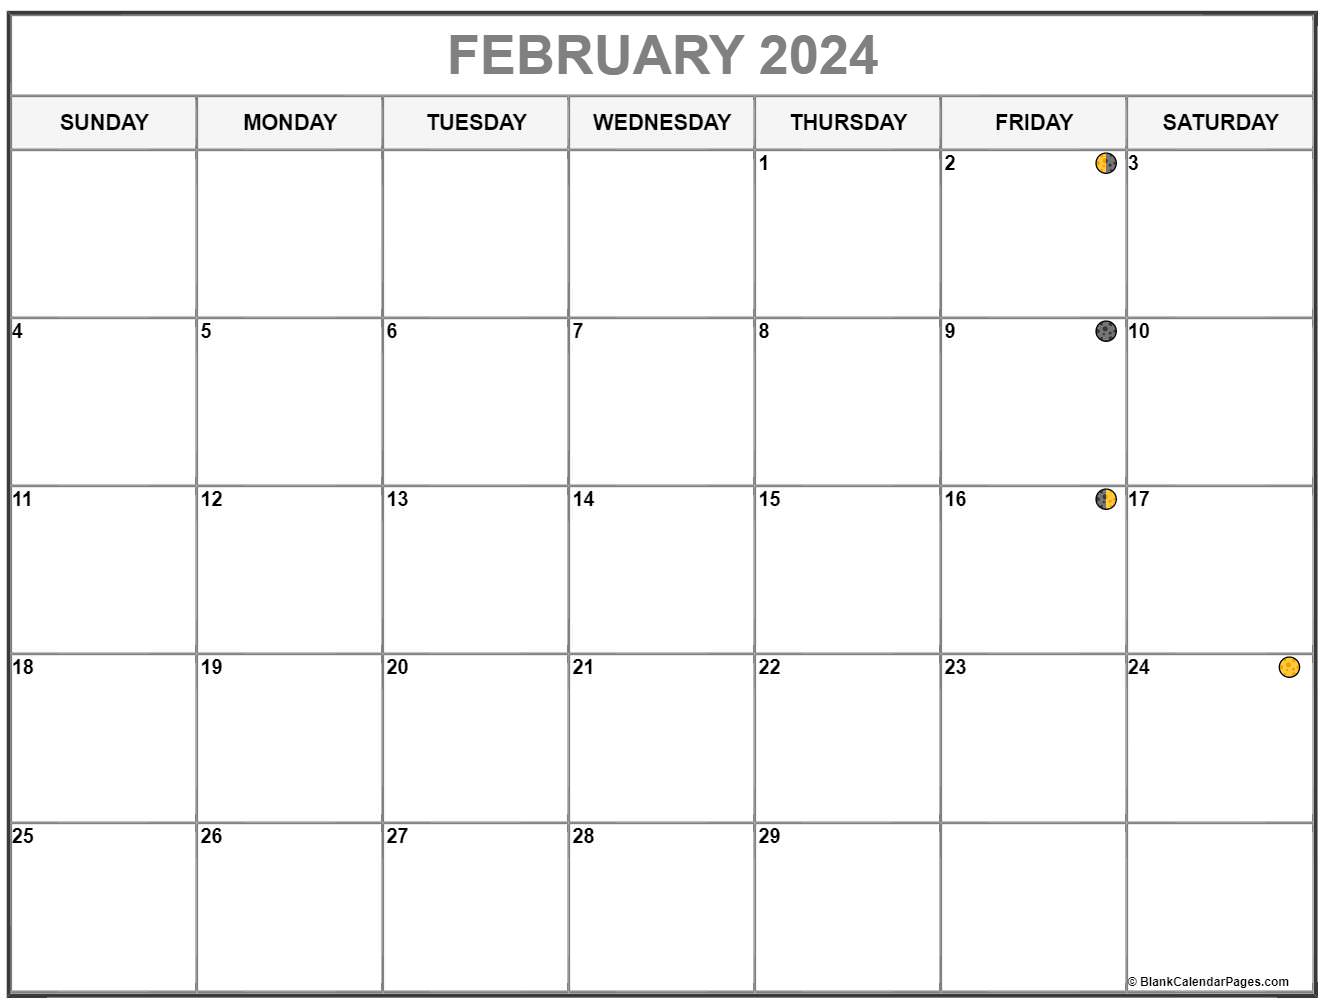 February 2020 Lunar Calendar | Moon Phase Calendar1767 x 1333